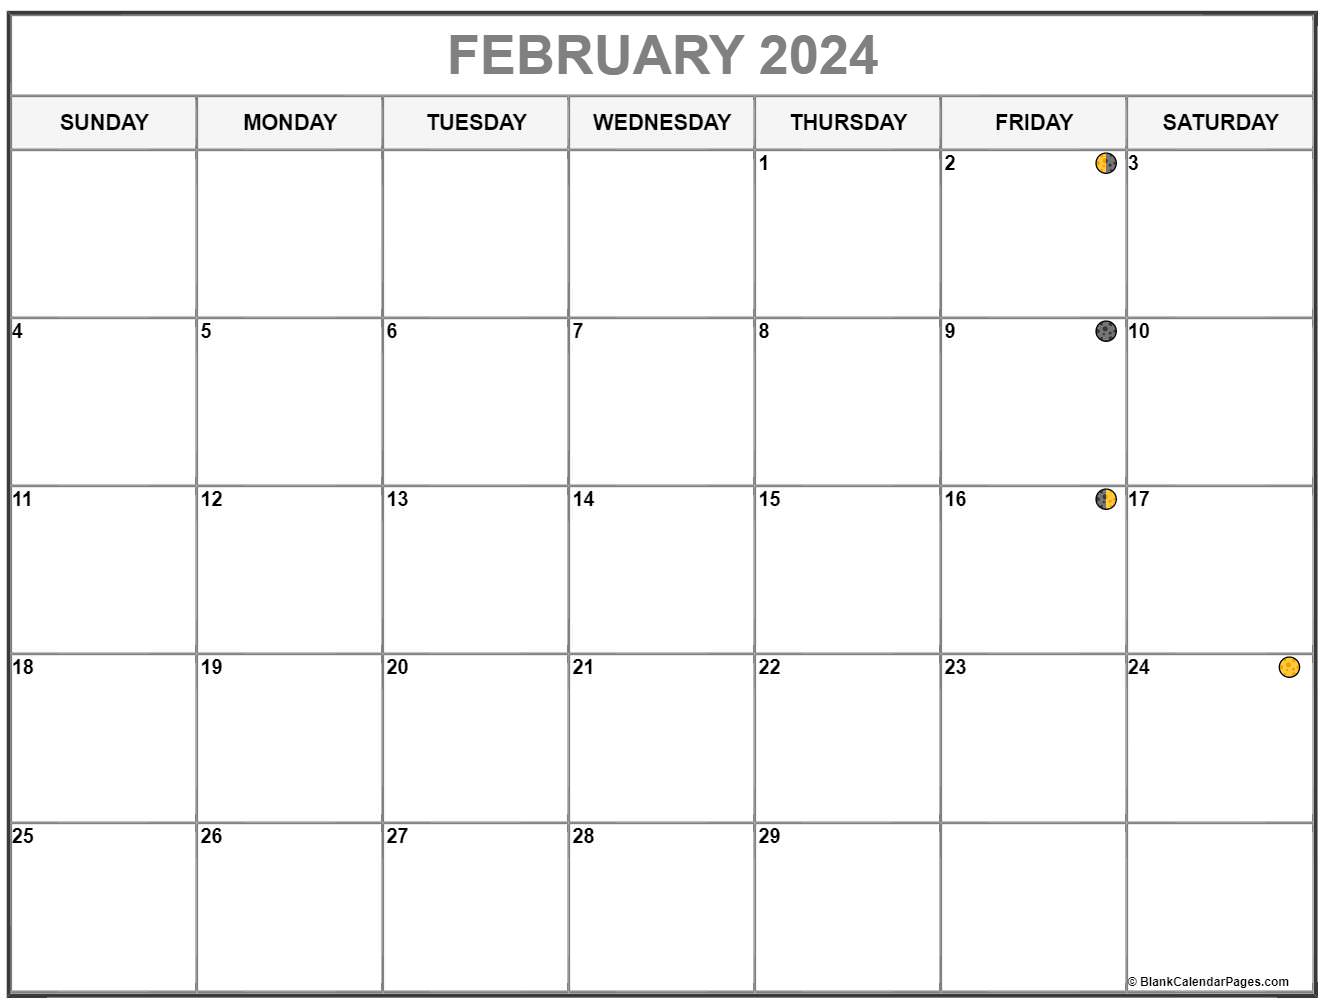 February 2020 Lunar Calendar | Moon Phase Calendar1767 x 1333